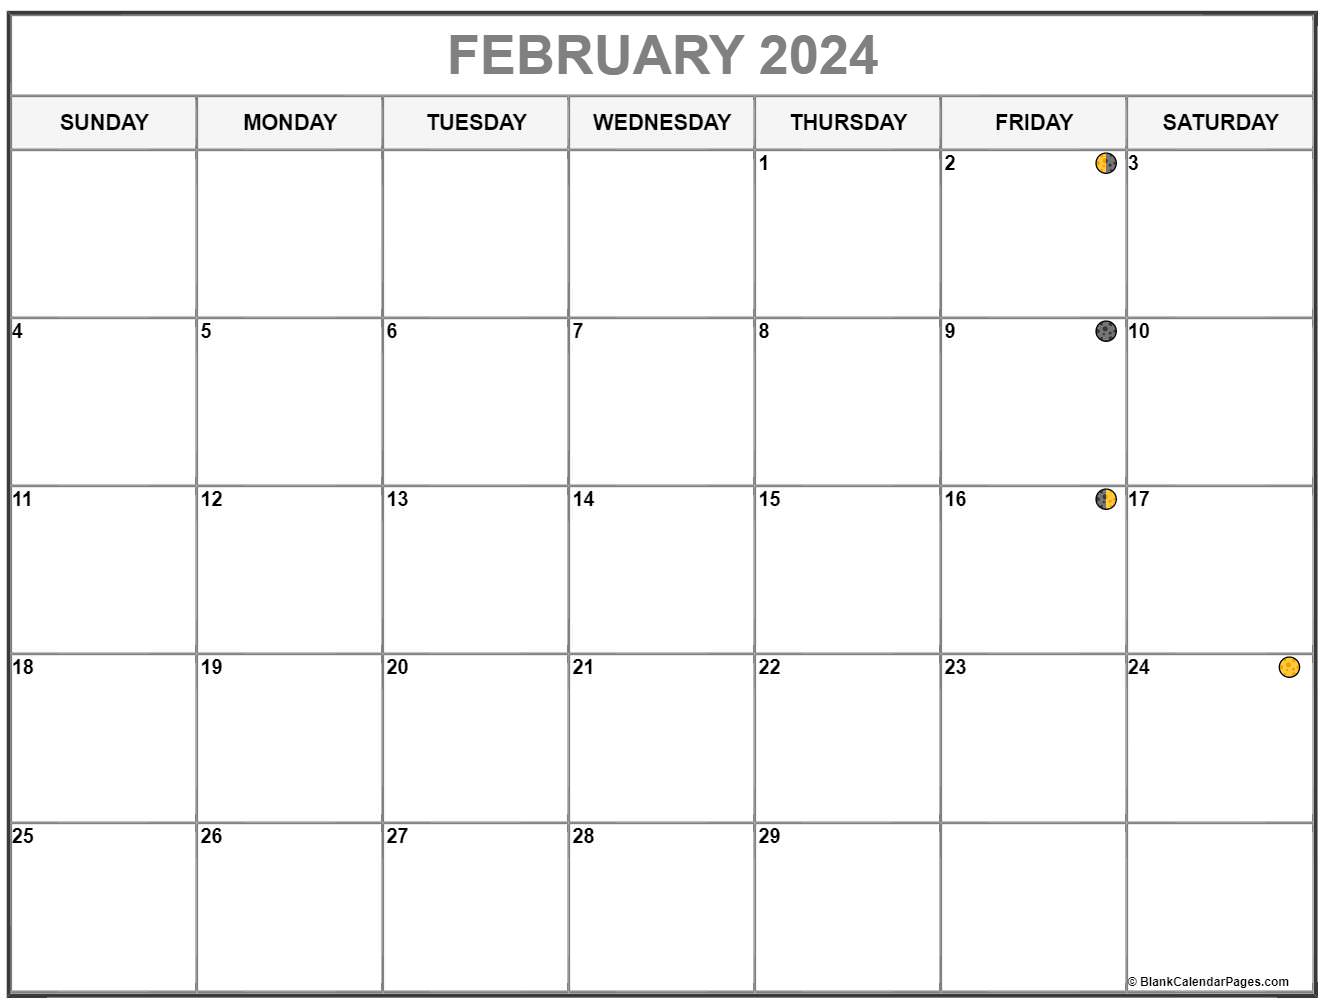 February 2020 Lunar Calendar | Moon Phase Calendar1767 x 1333